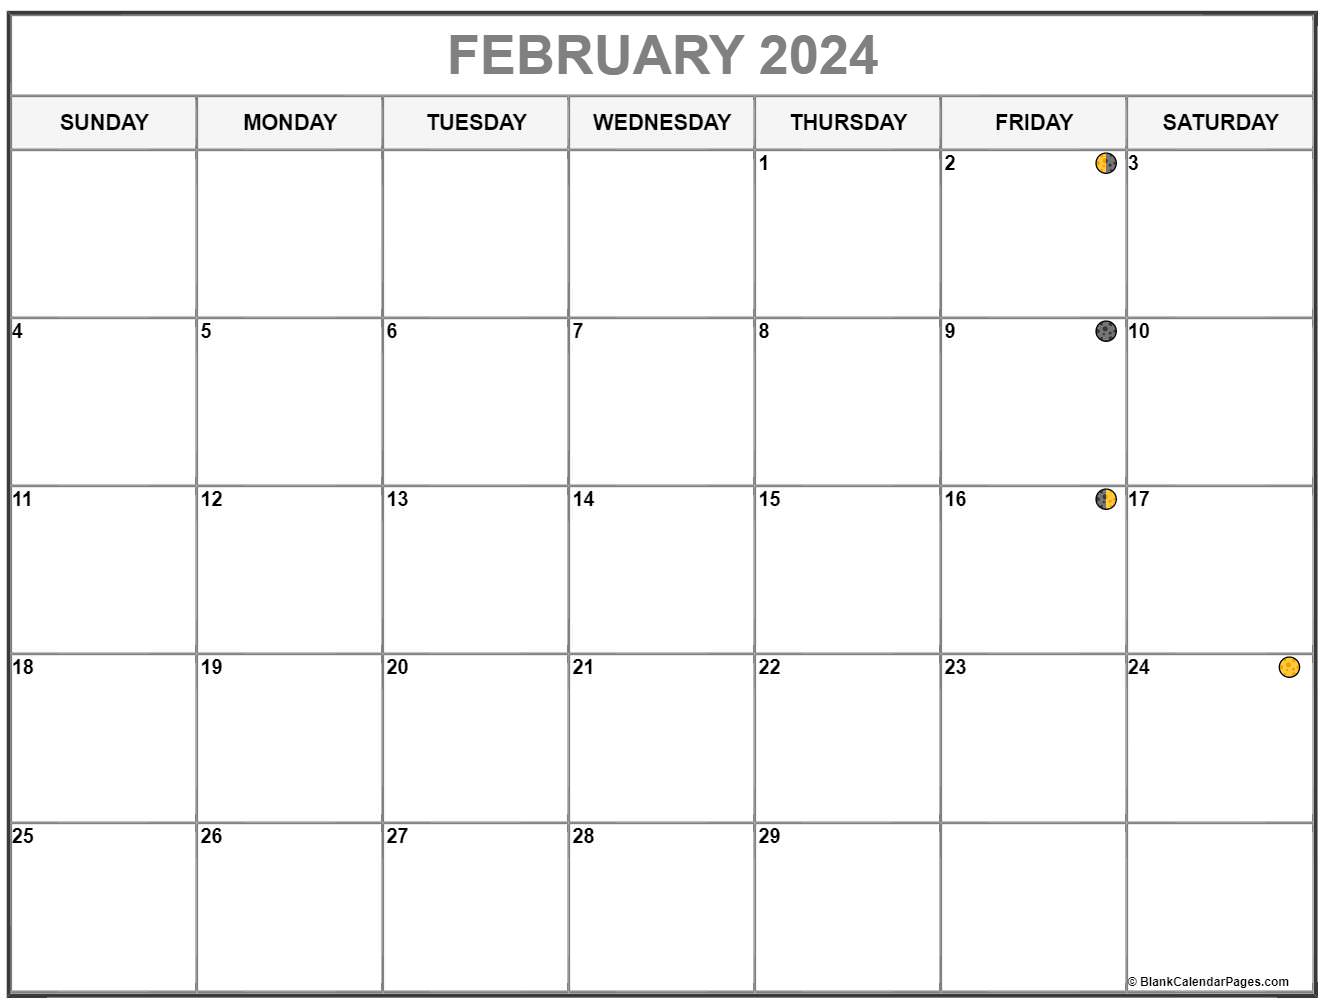 February 2020 Lunar Calendar | Moon Phase Calendar1767 x 1333